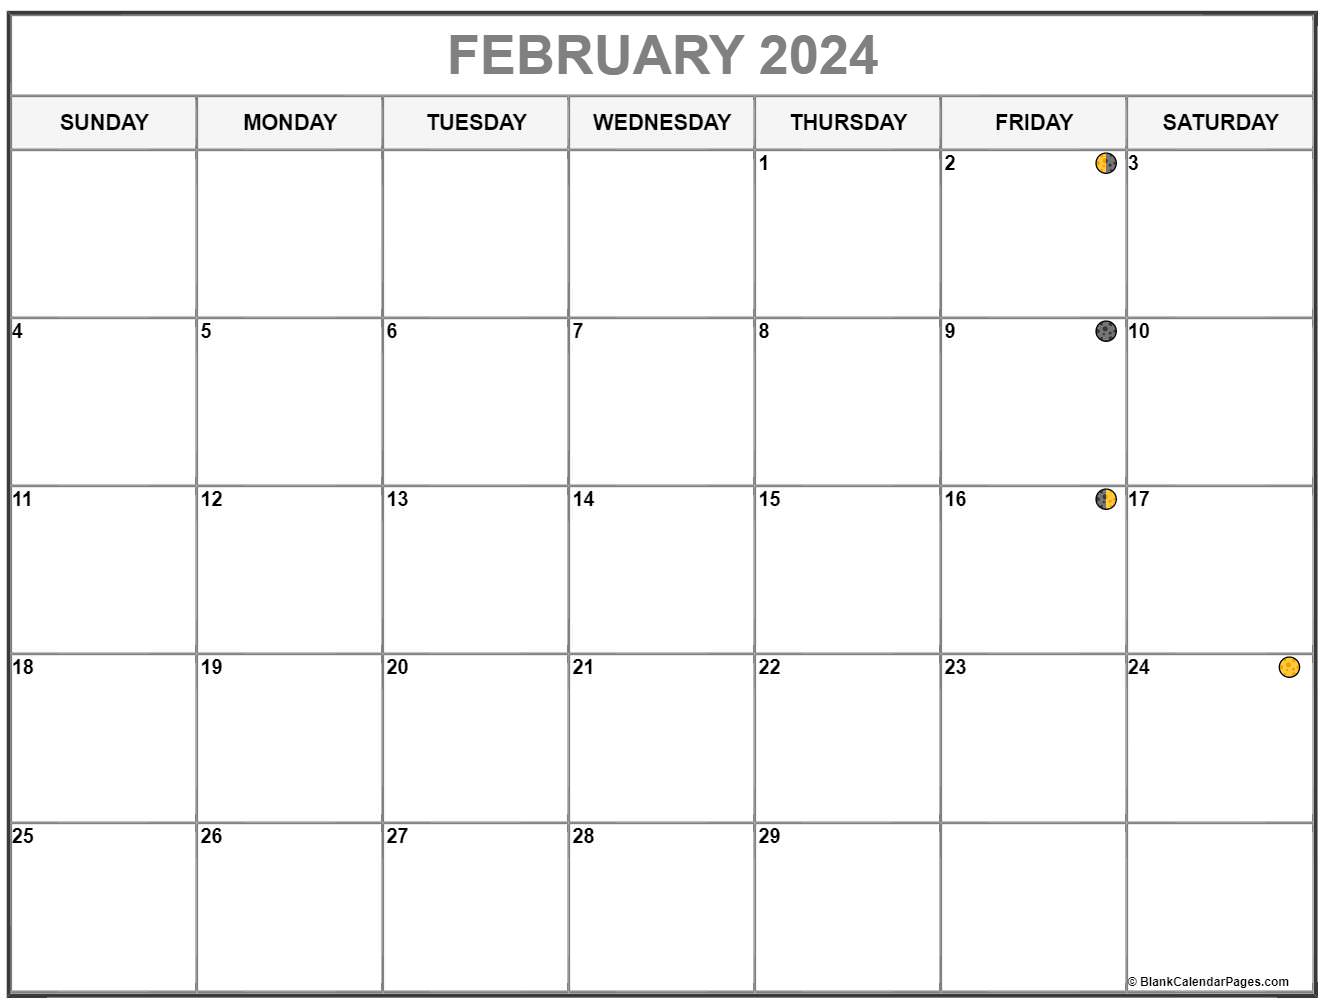 February 2020 Lunar Calendar | Moon Phase Calendar1767 x 1333